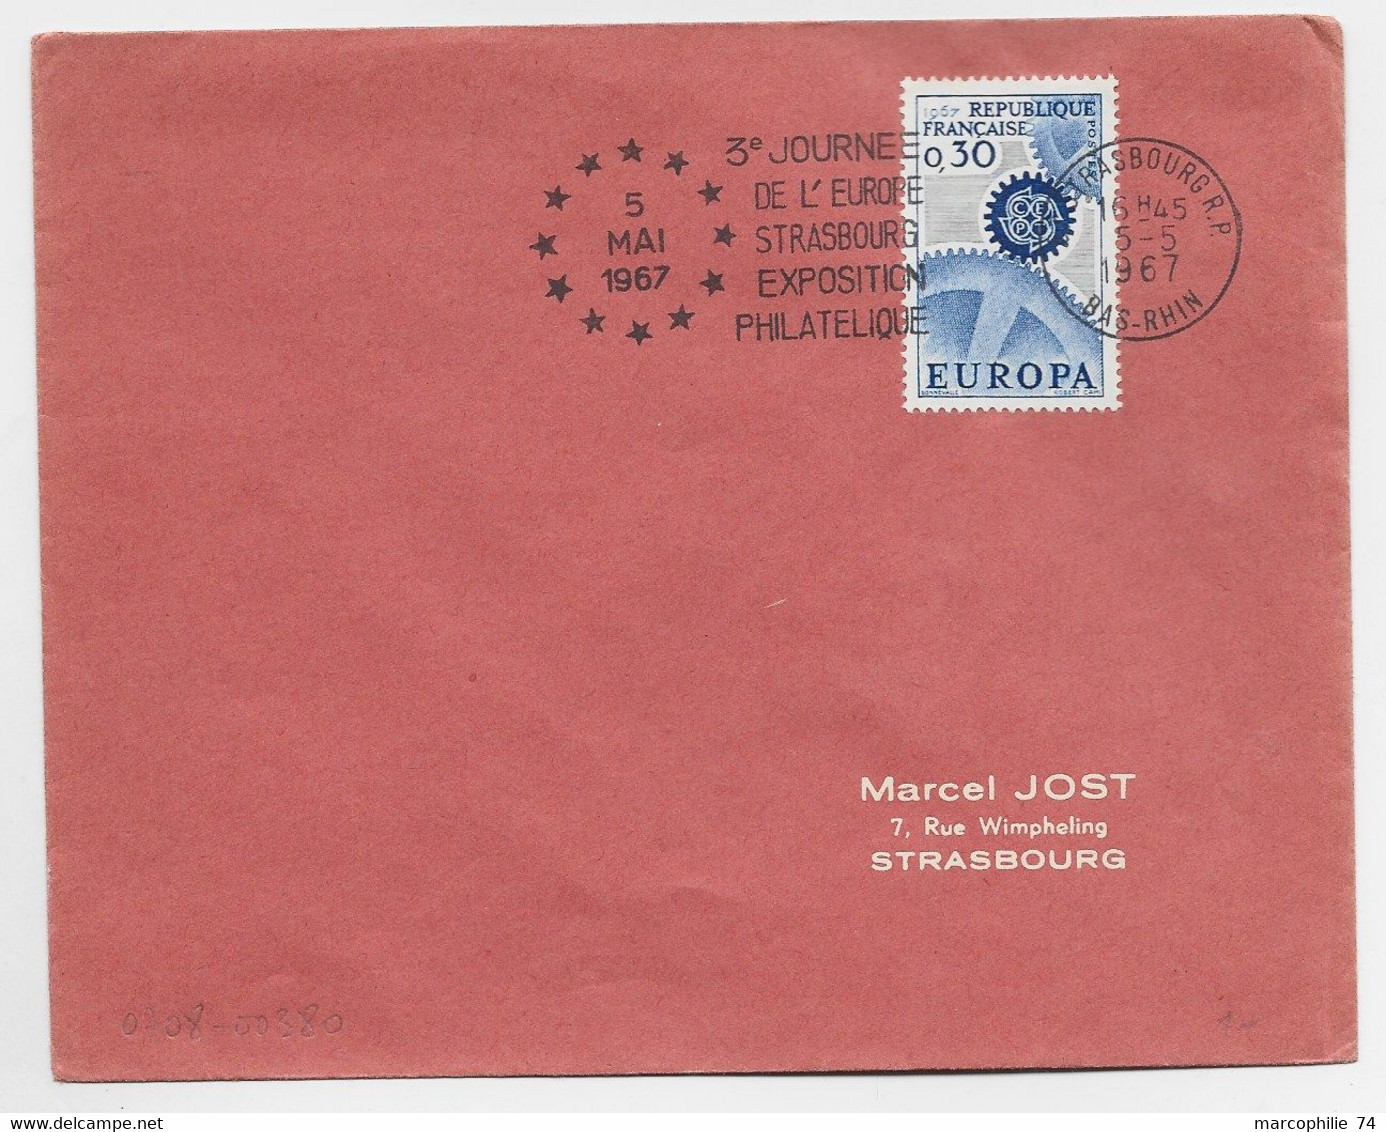 FRANCE EUROPA 30C SEUL LETTRE COVER BRIEF MEC STRASBOURG 5.5.1967 3E JOURNEE DE L'EUROPE - 1967